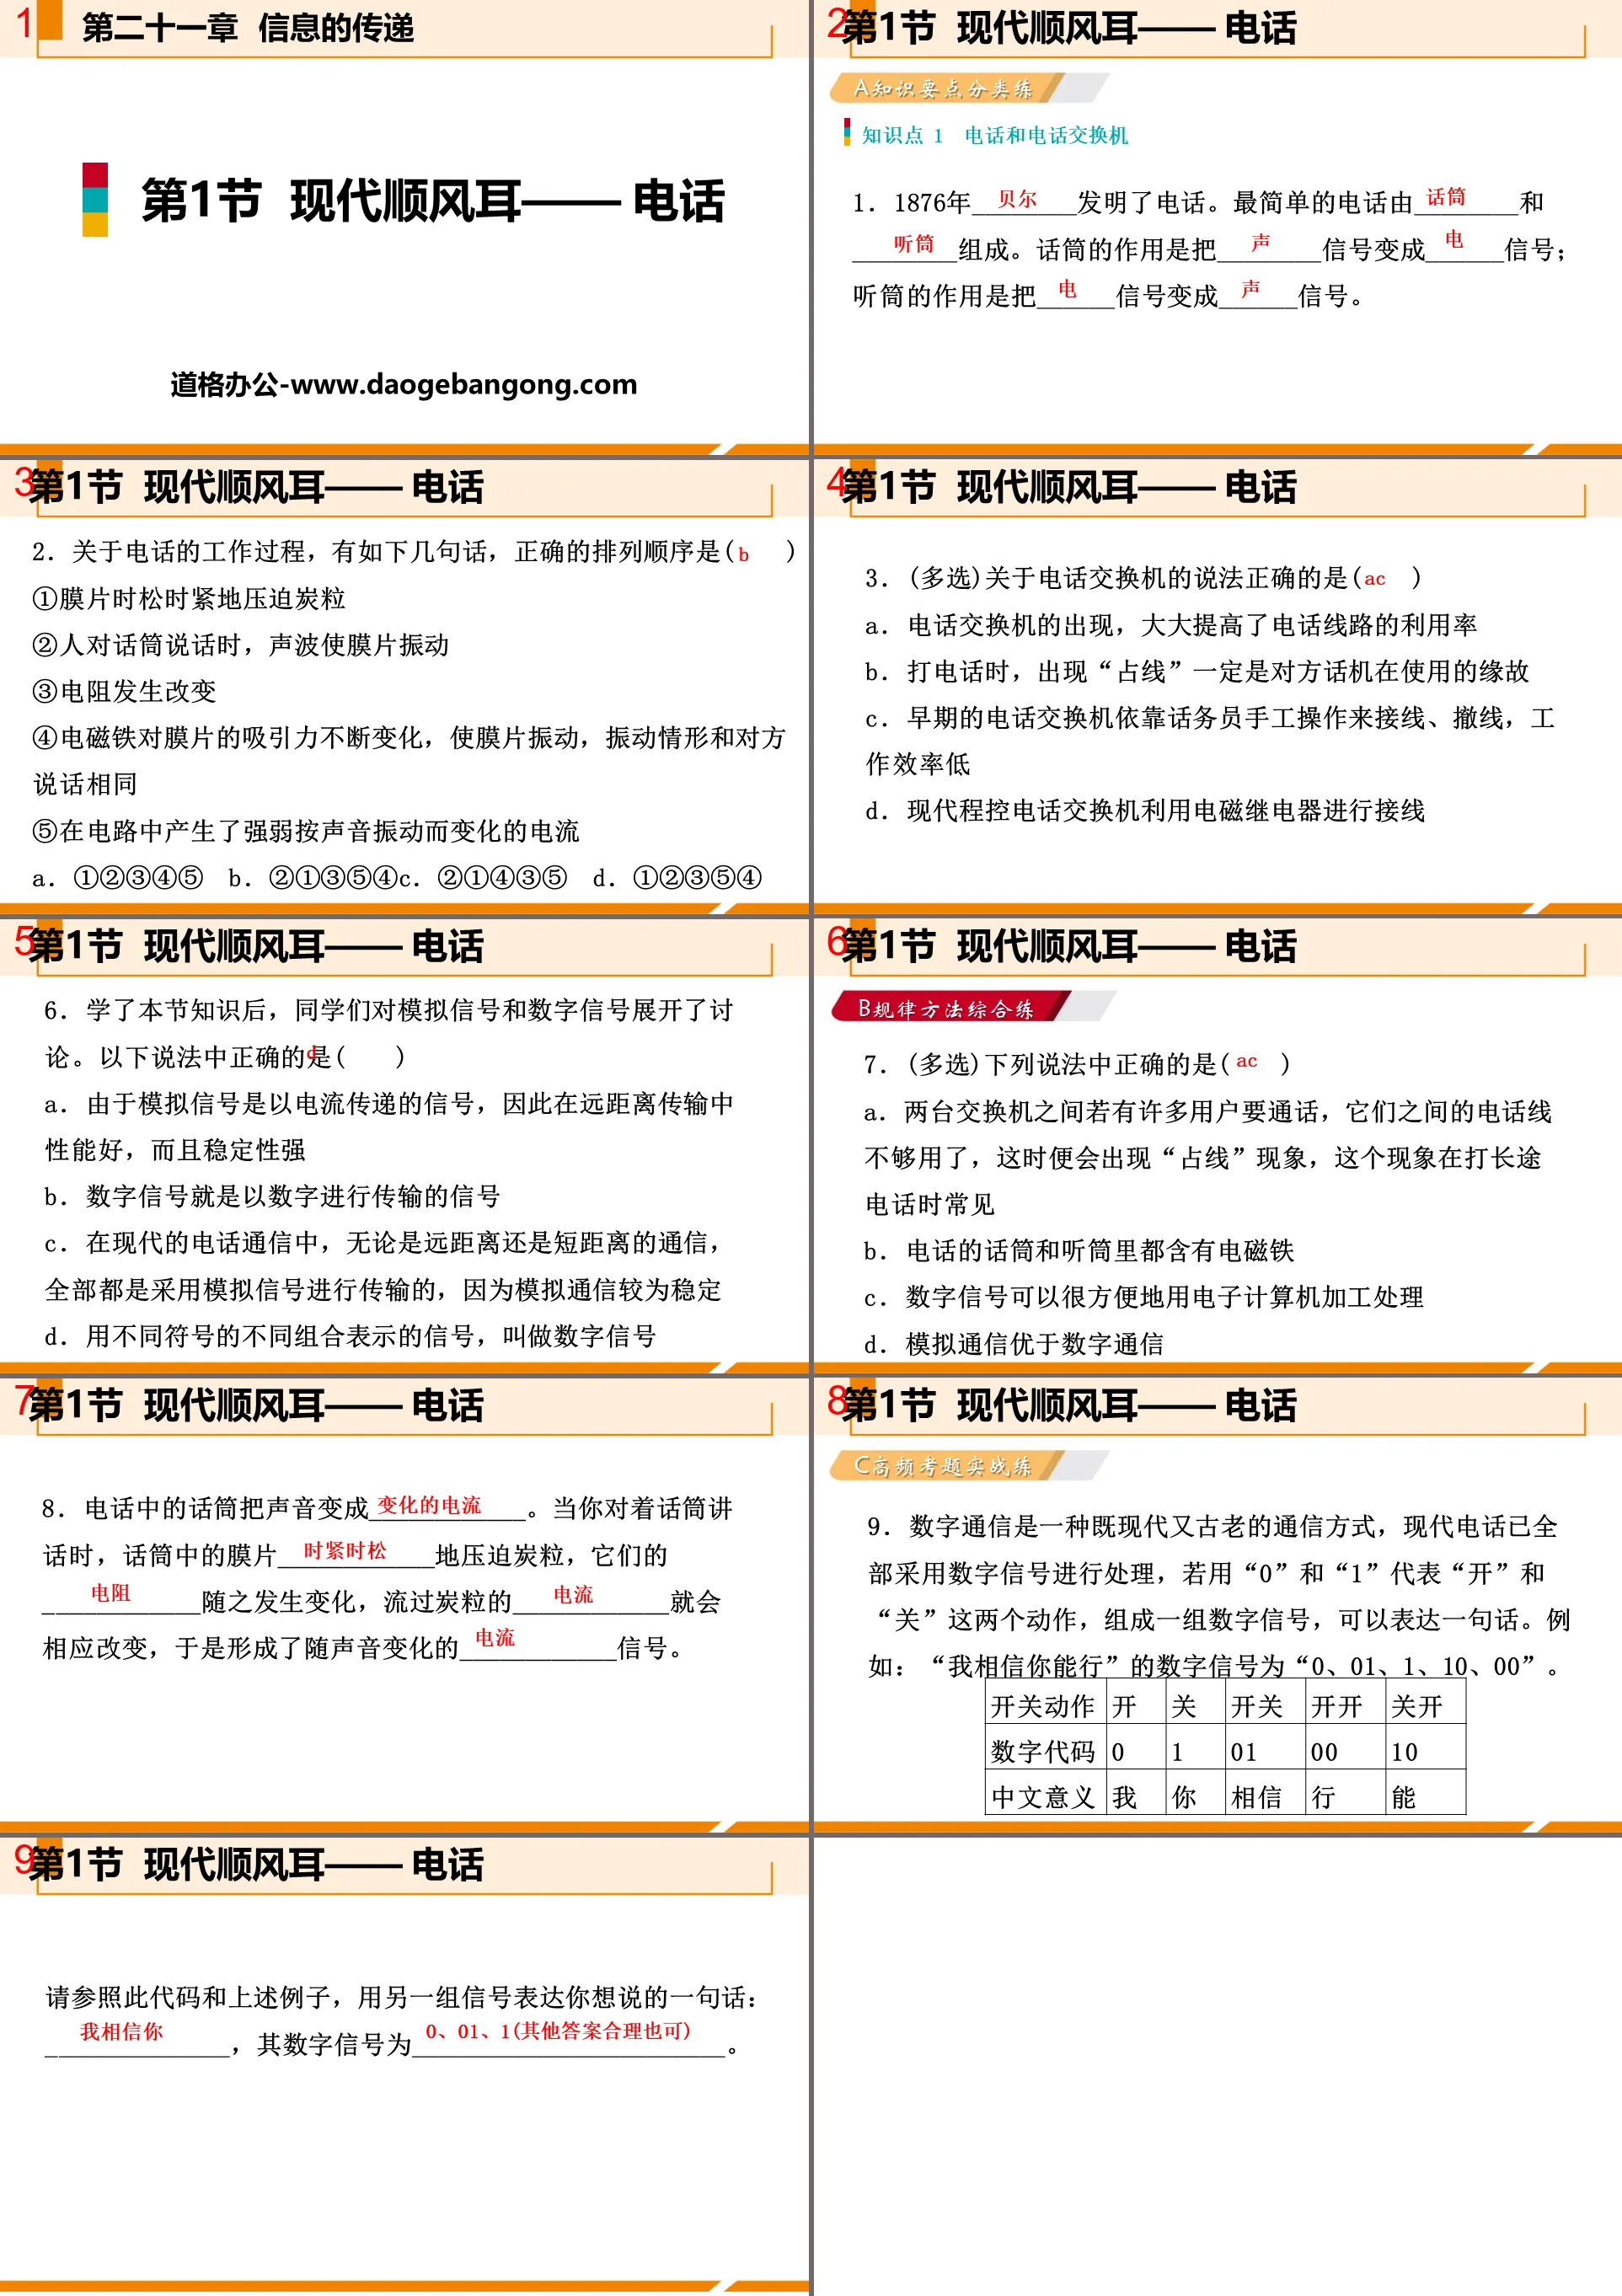 "Modern Shunfeng Ear─Telephone" Information Transmission PPT Download